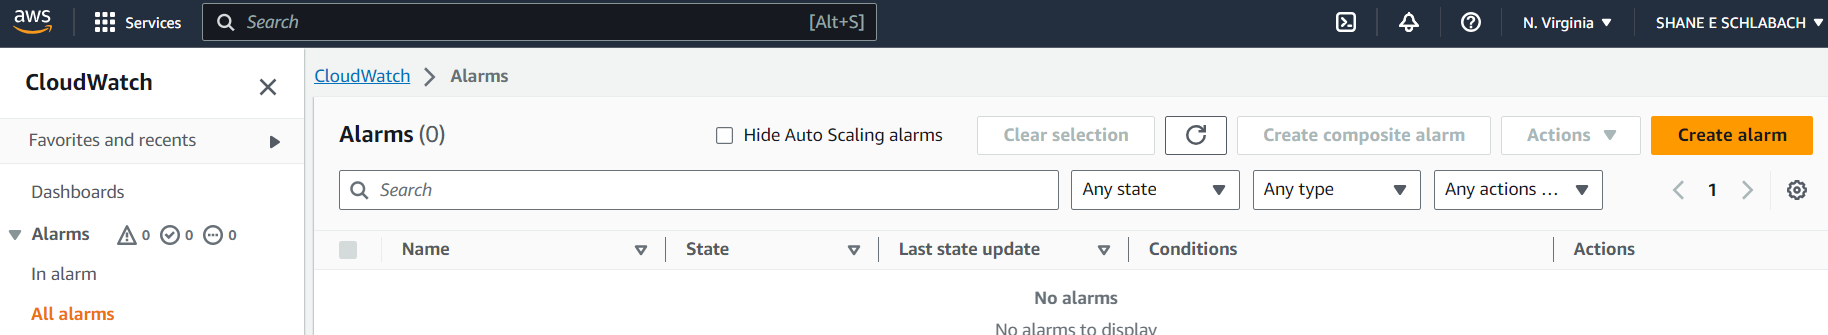 AWS Account Setup First Steps Create Alarm